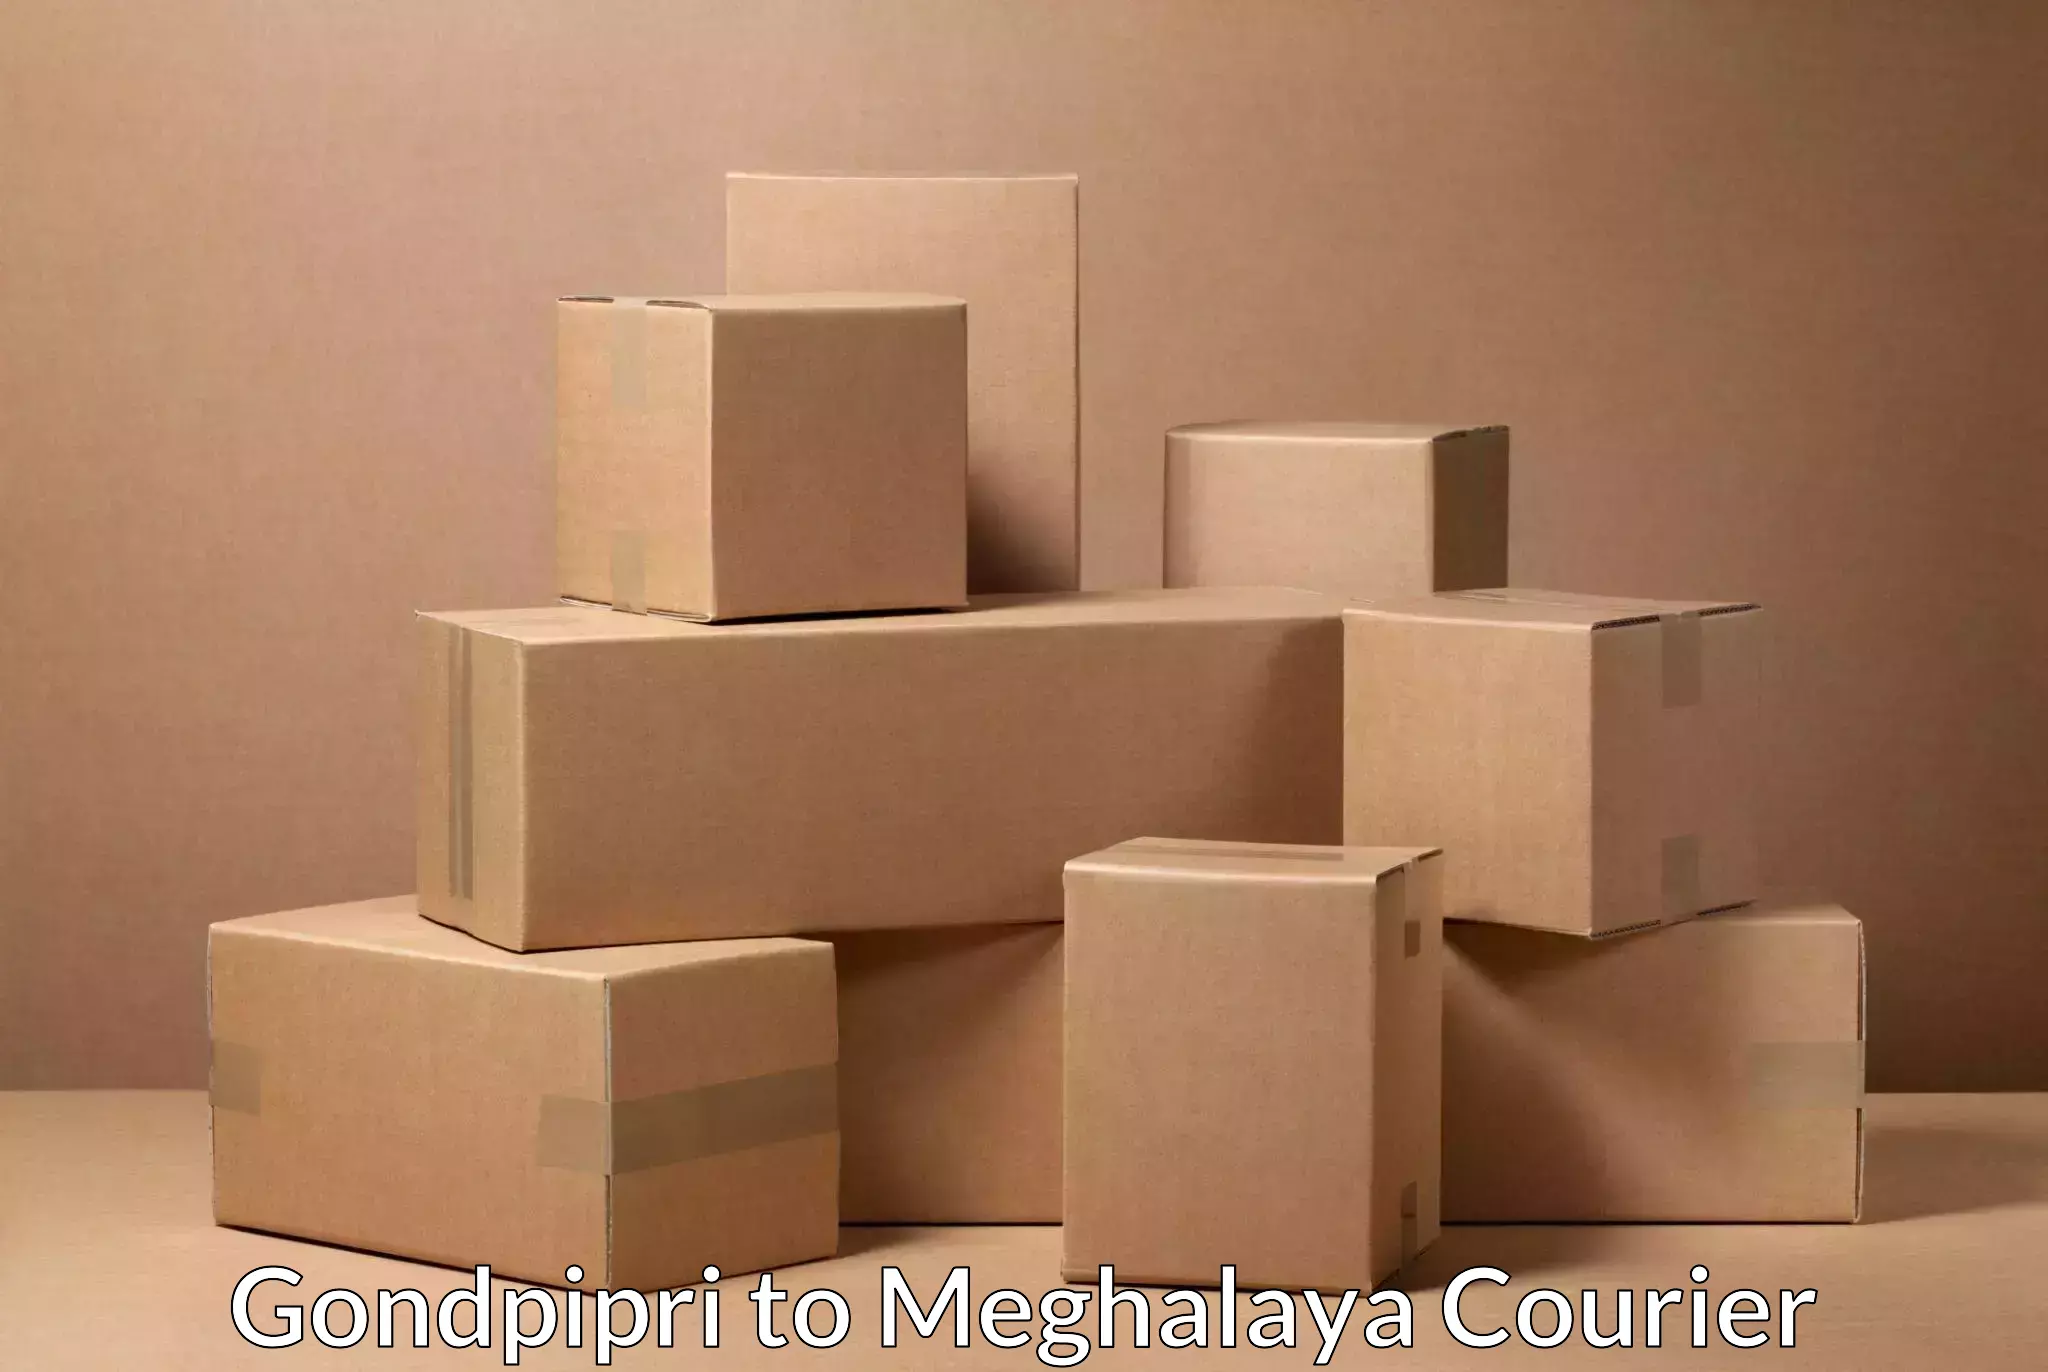 Express mail solutions Gondpipri to Meghalaya